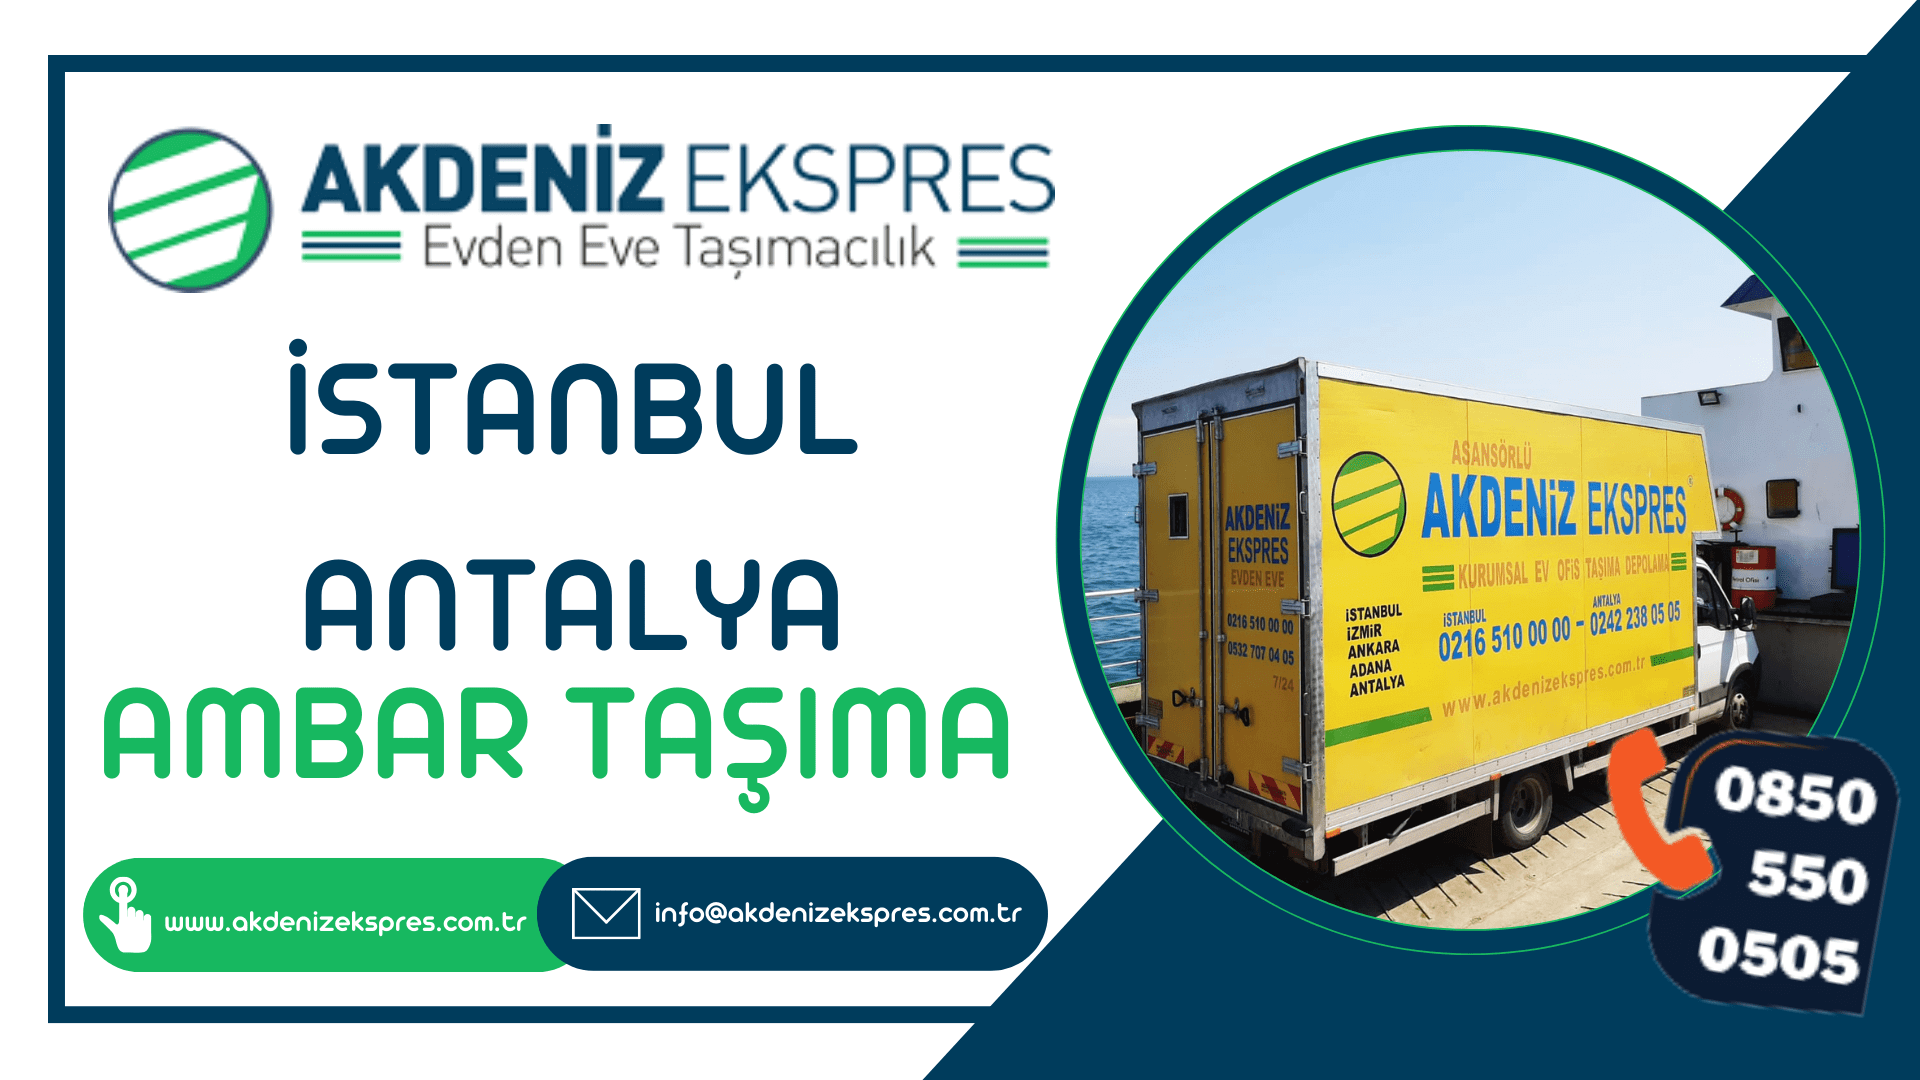 İstanbul Antalya ambar taşıma